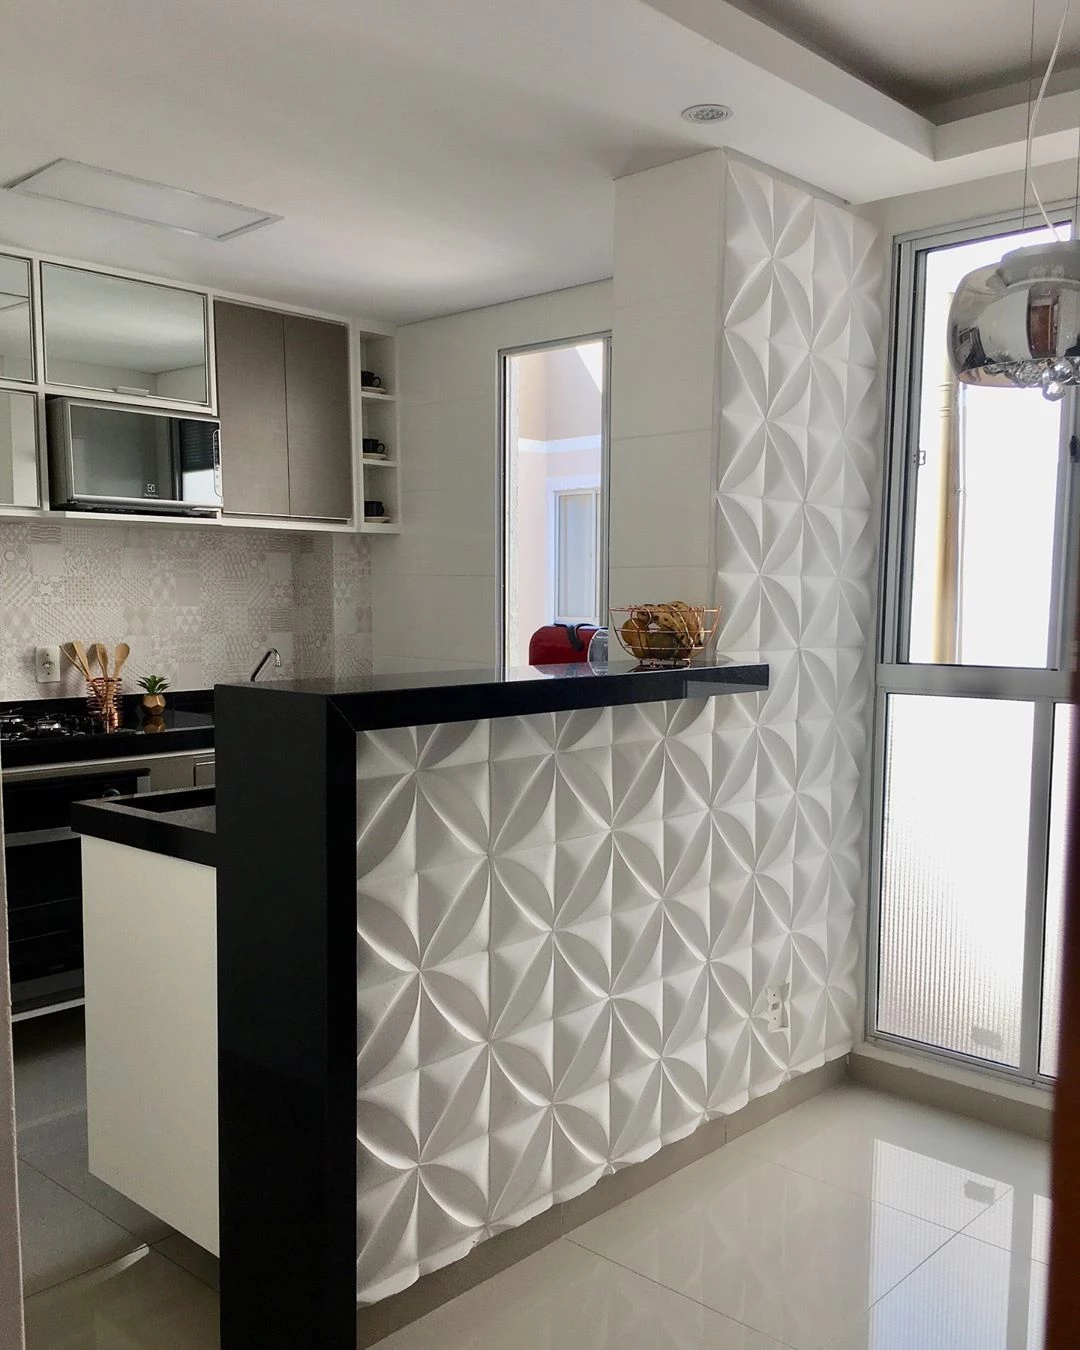 Azulejo preto em formato retangular na cozinha